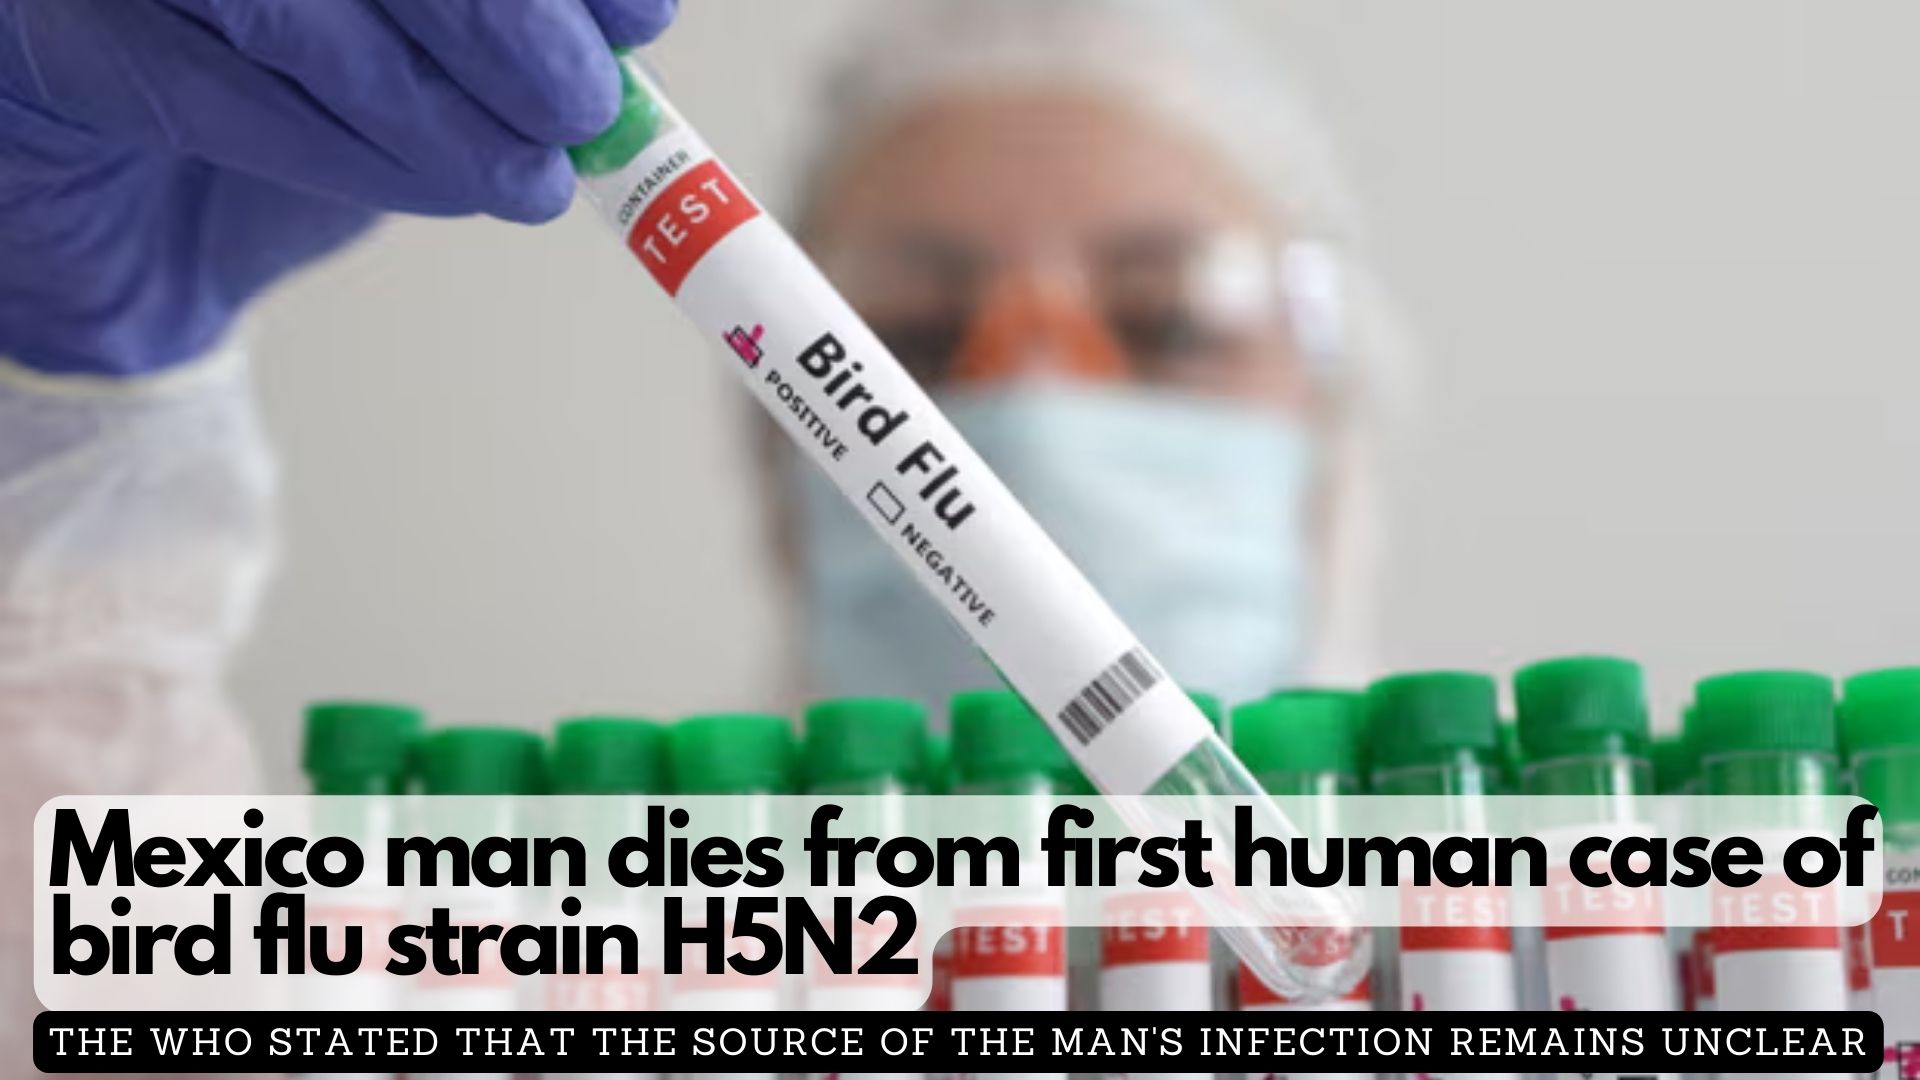 Mexico man dies from first human case of bird flu strain H5N2